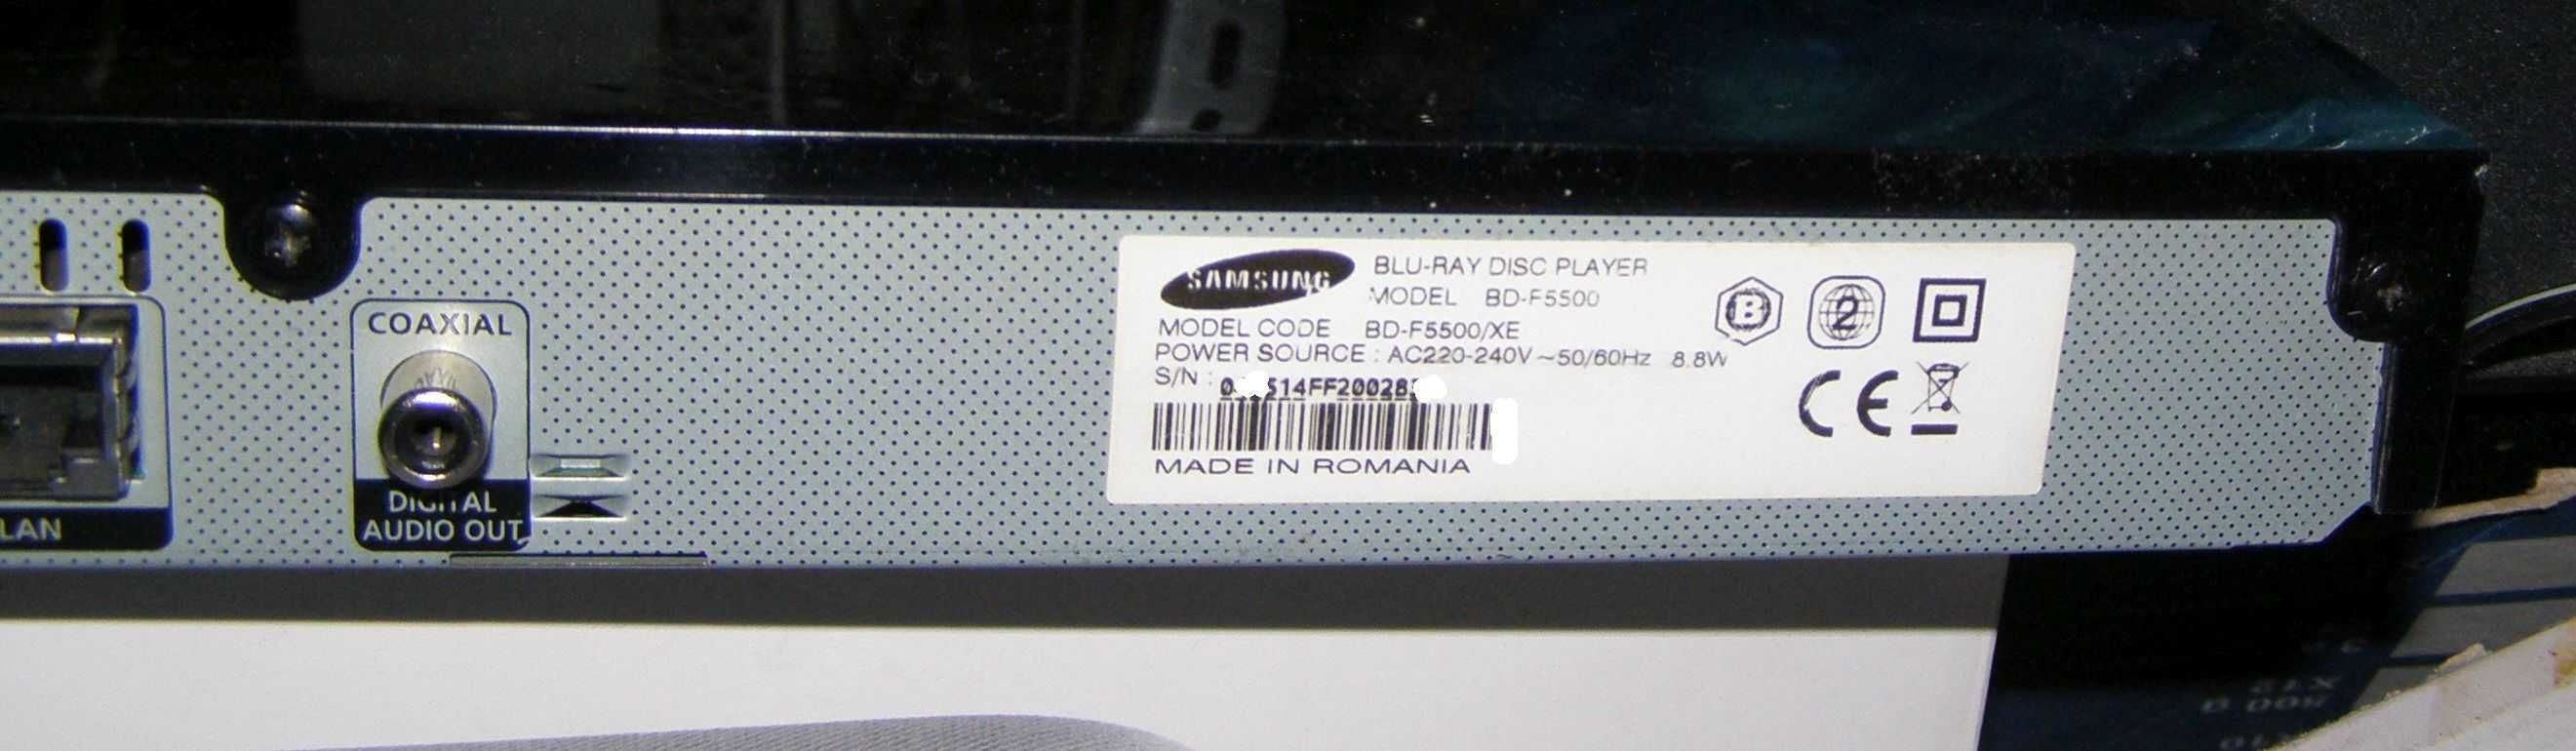 Blu-ray 3D player Samsung sau schimb